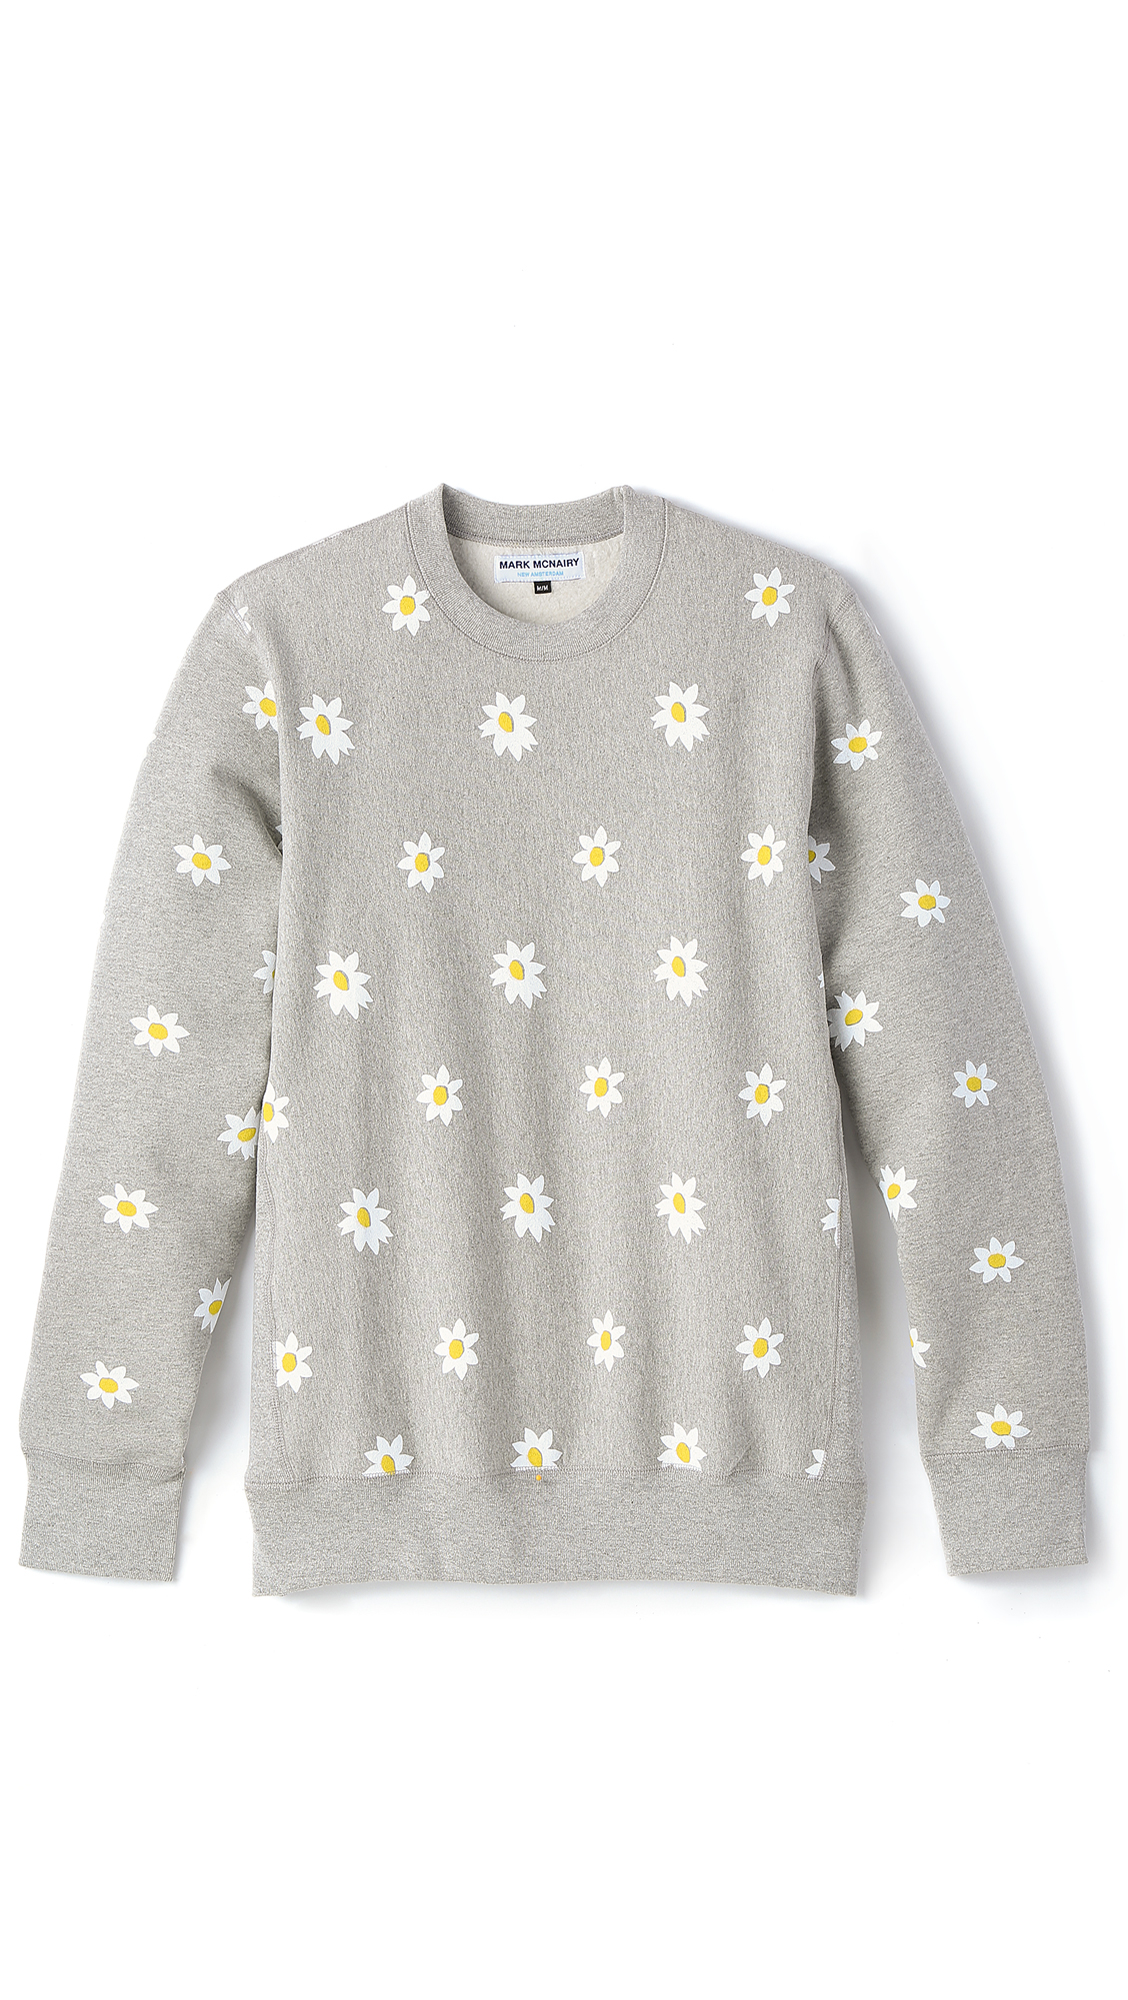 Download Mark McNairy New Amsterdam Daisy Print Sweatshirt in ...